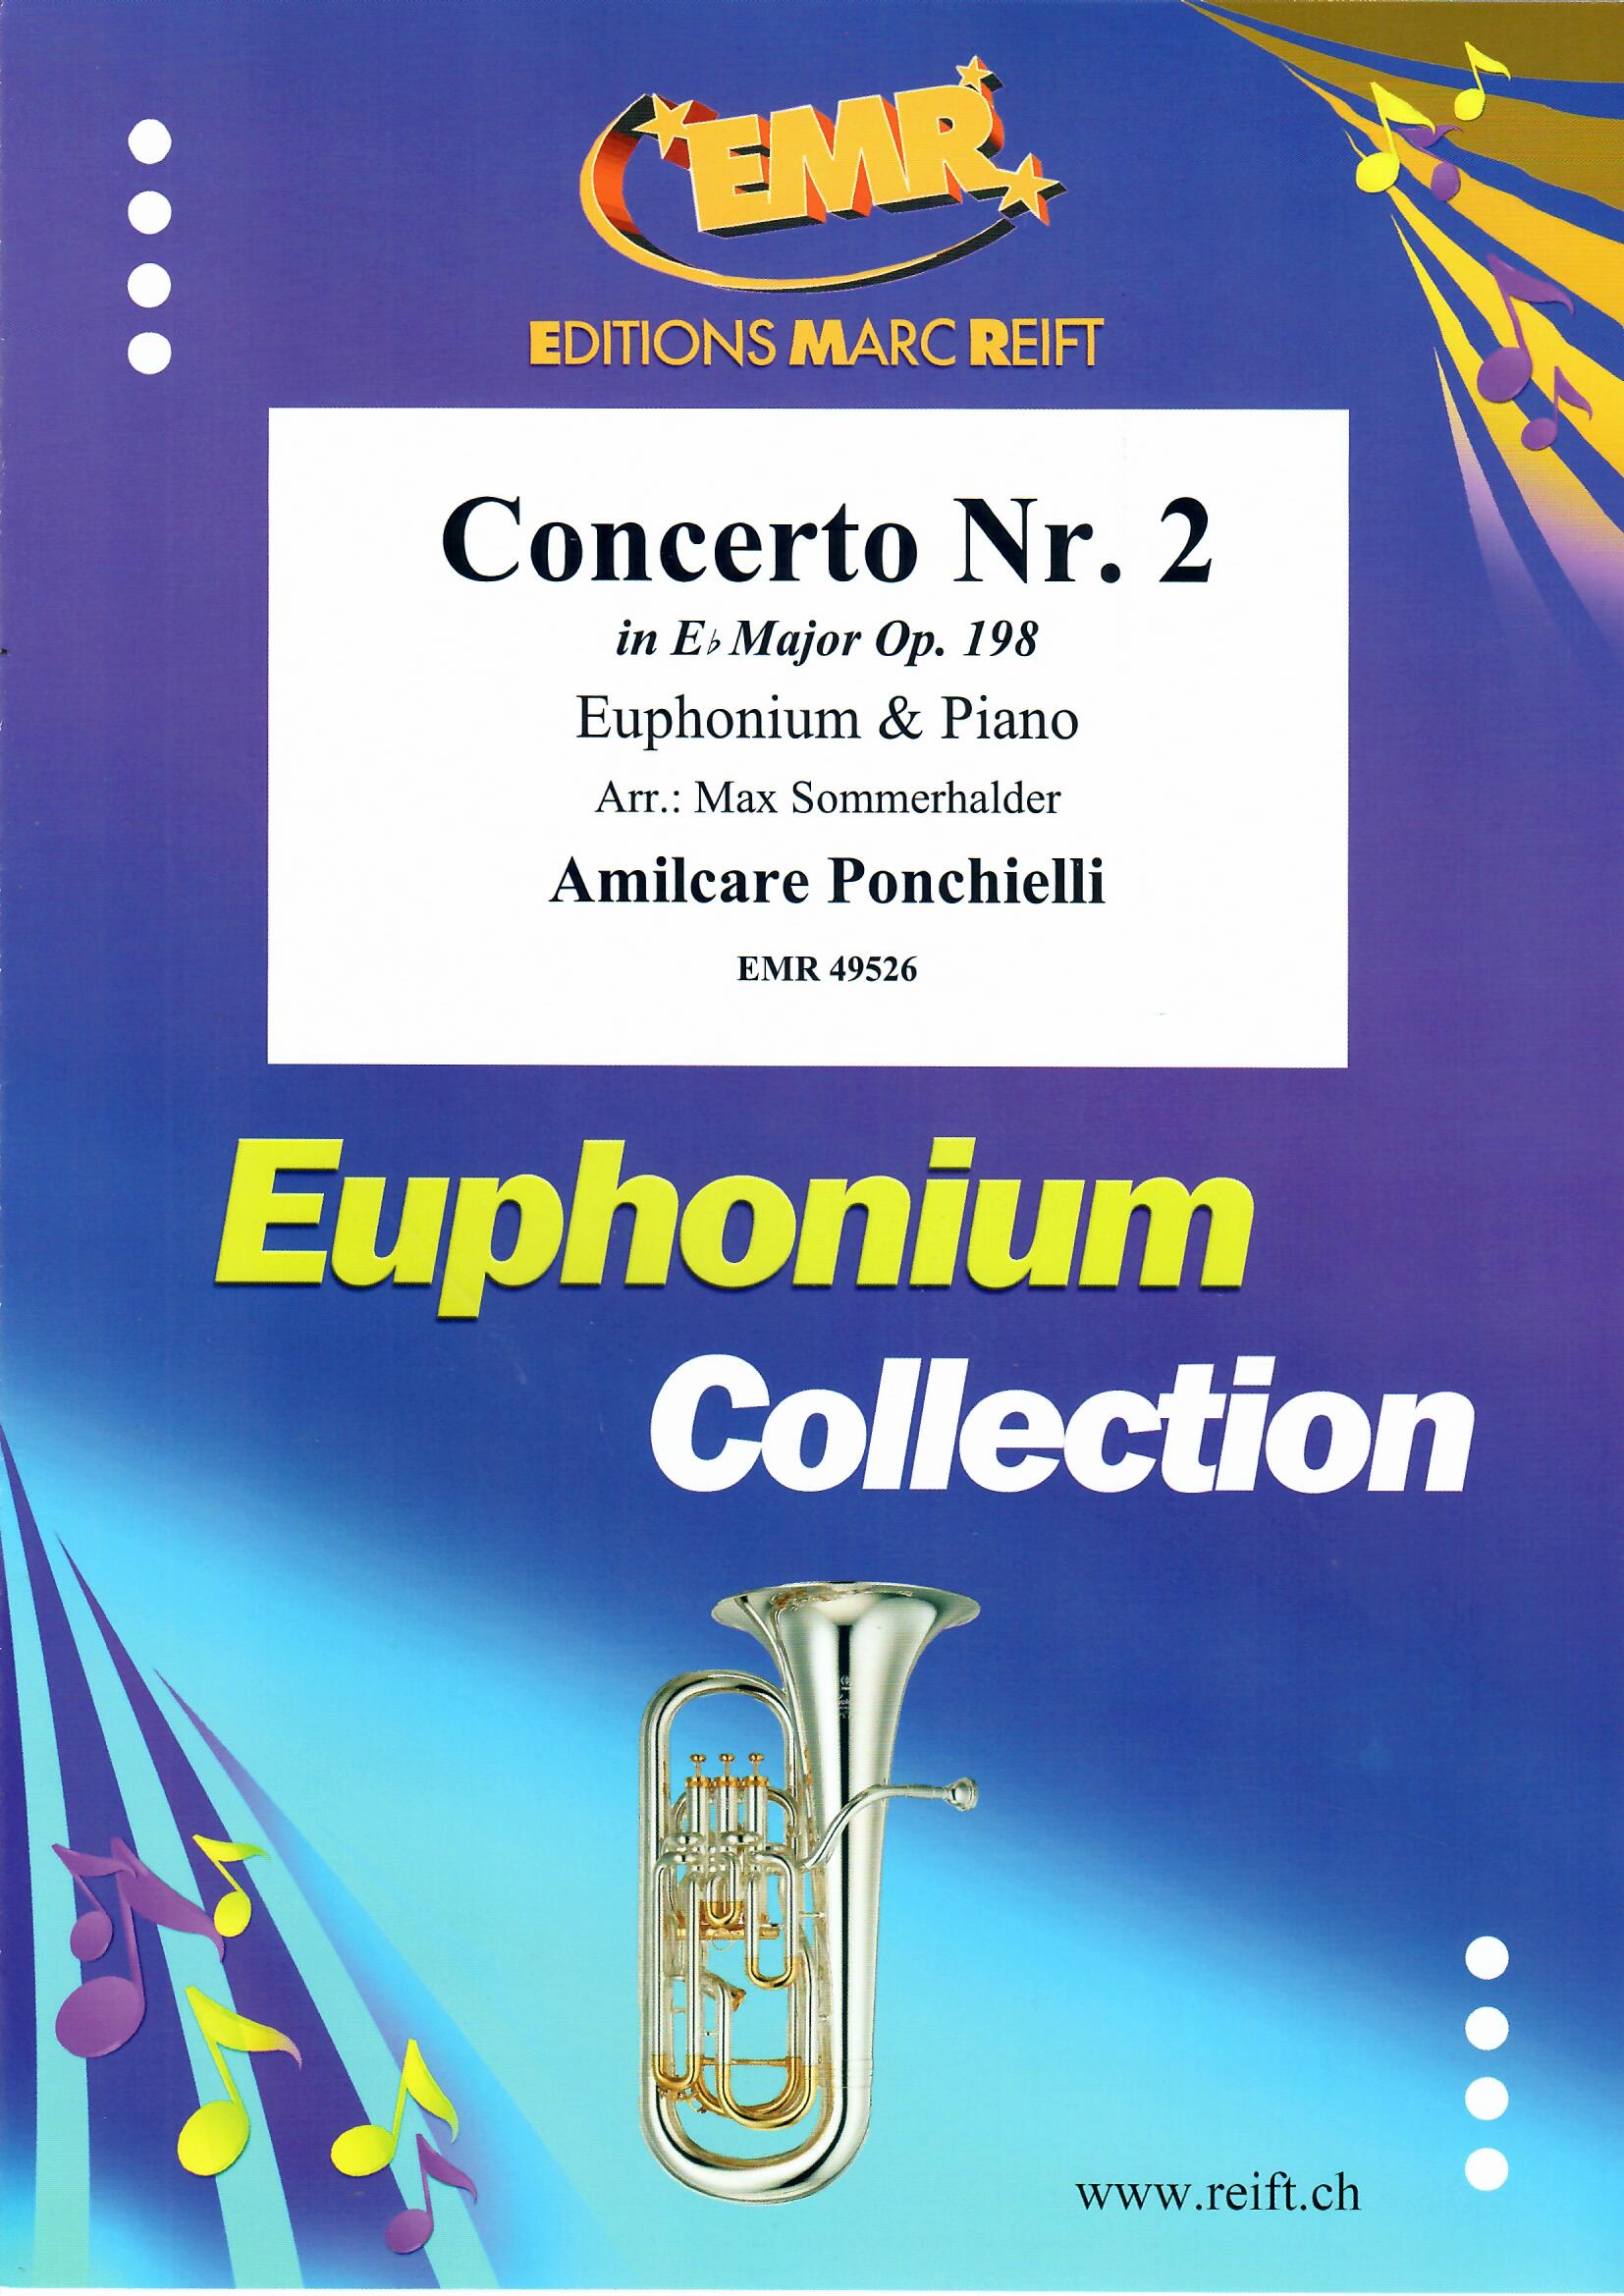 CONCERTO NR. 2 - Euphonium & Piano